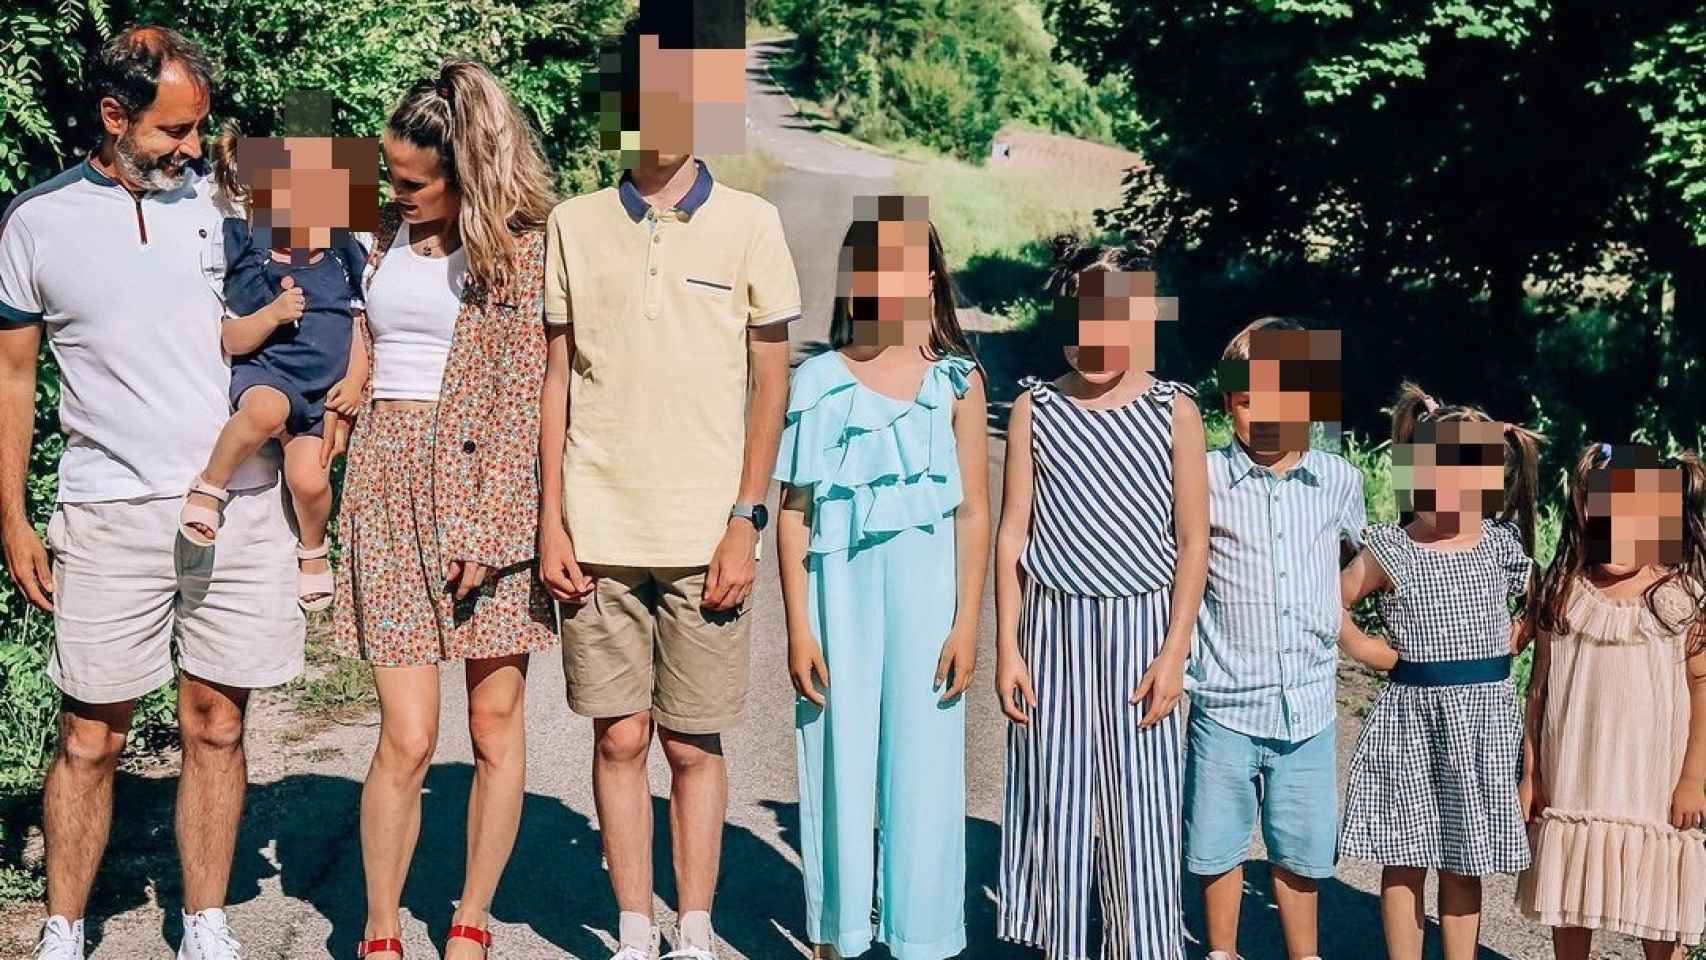 La familia, al completo, en una foto del perfil de Instagram de la 'influencer'.